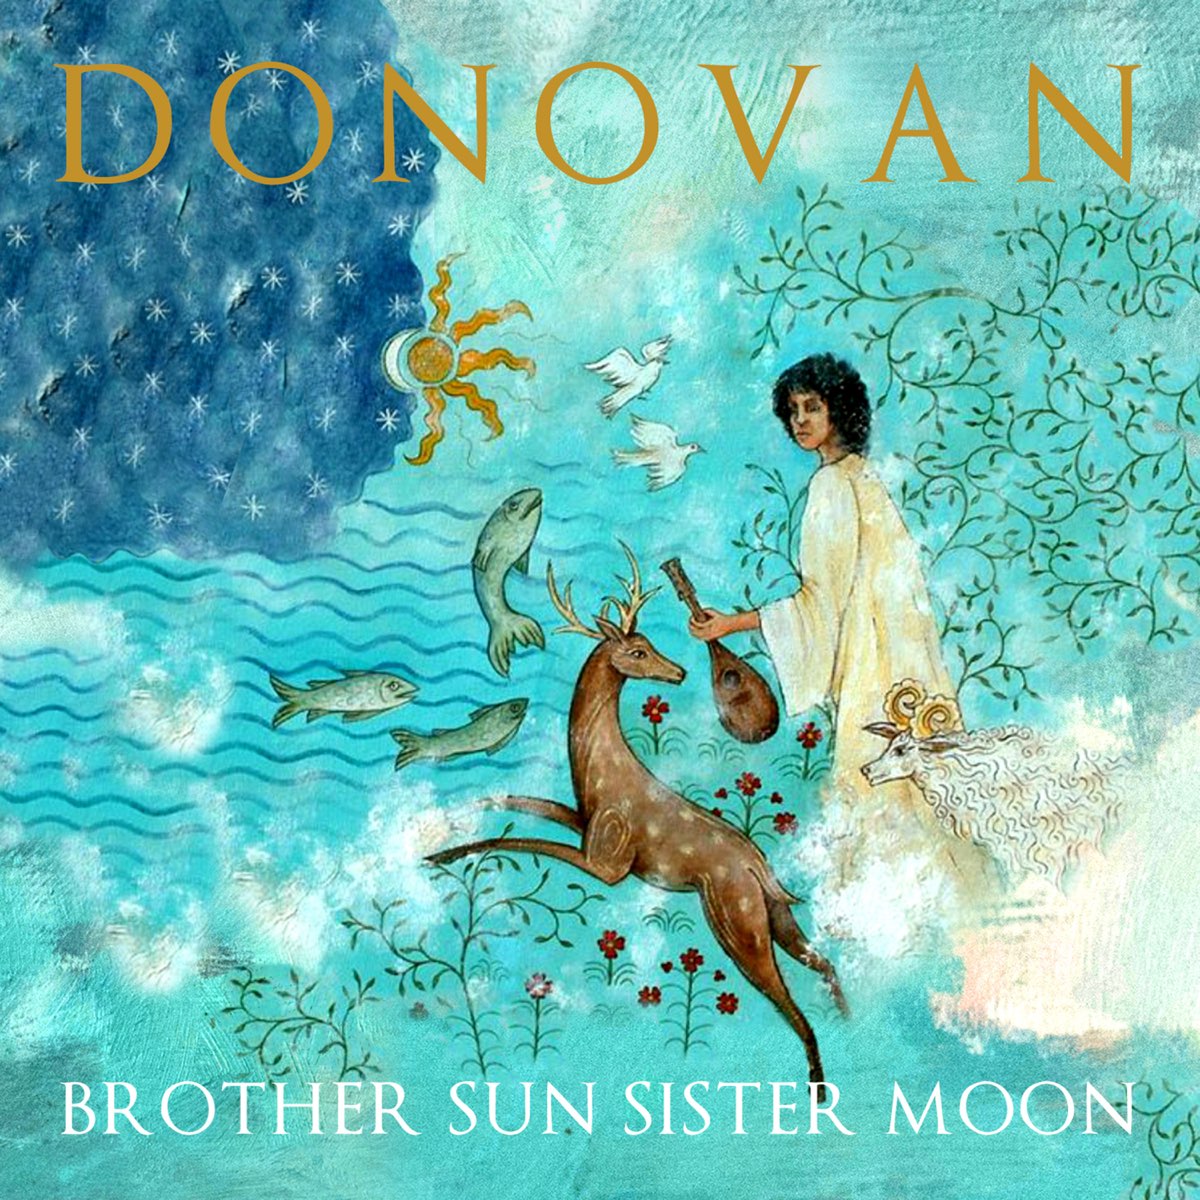 Sister moon. Brother Sun sister Moon. Donovan brother Sun sister Moon Cover. Brother Sun, sister Moon 1972. The Moon sister.